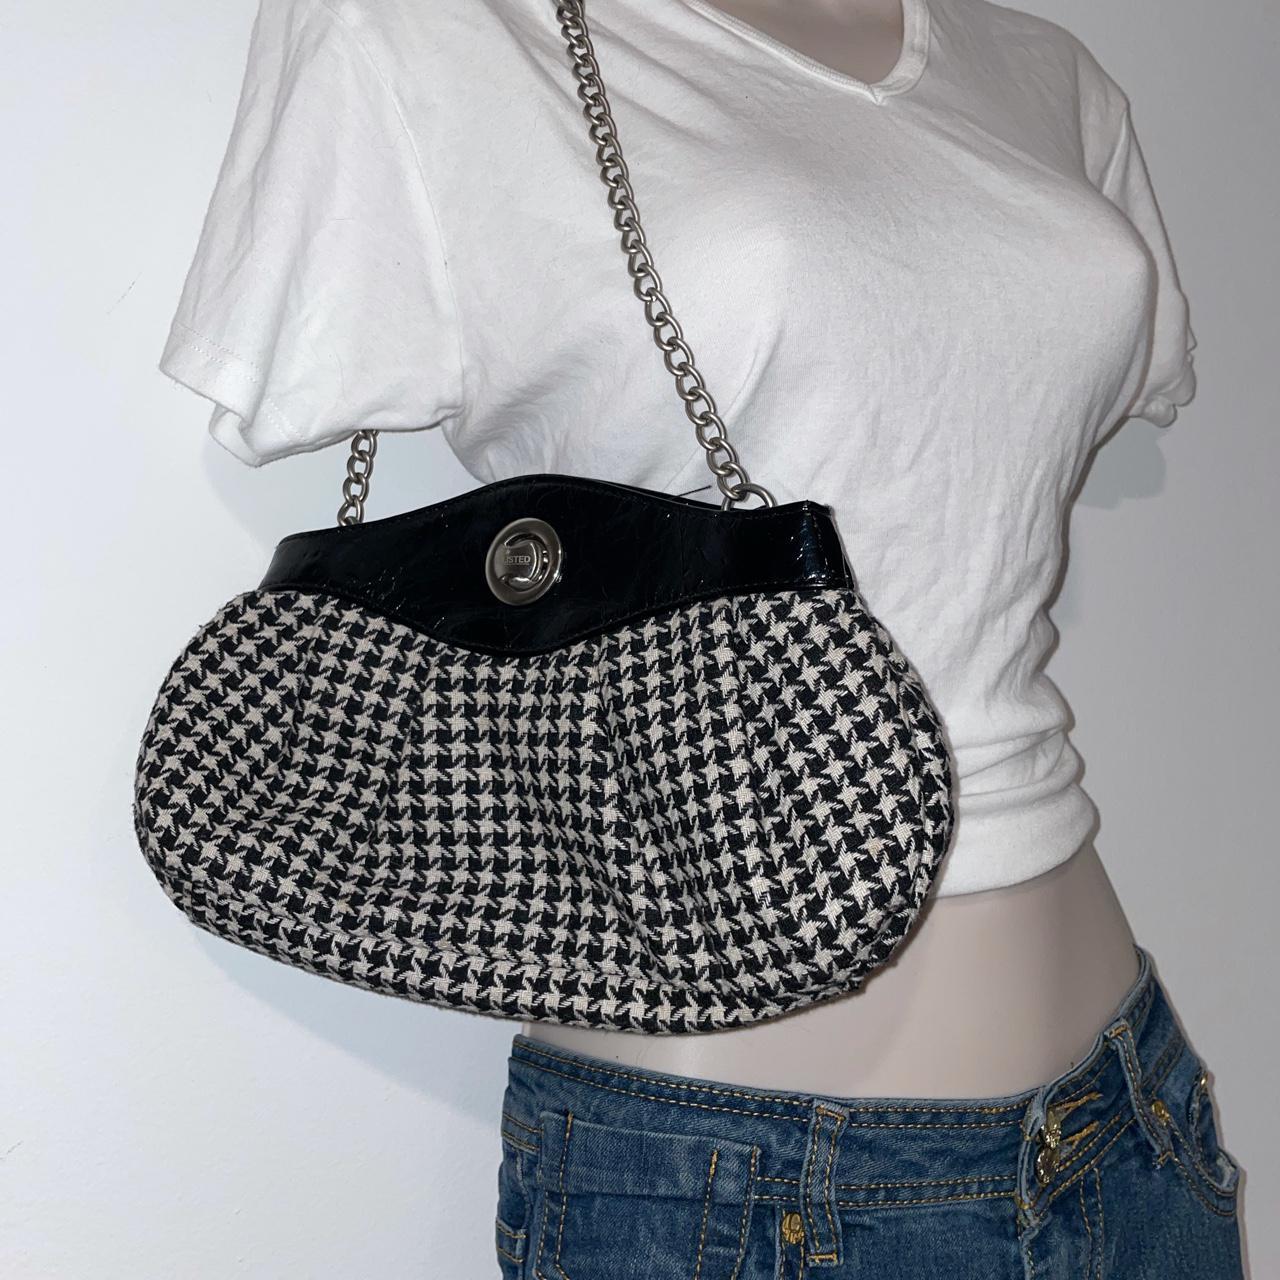 Product Image 1 - Kenneth Cole handbag 🖤


Brand: Kenneth